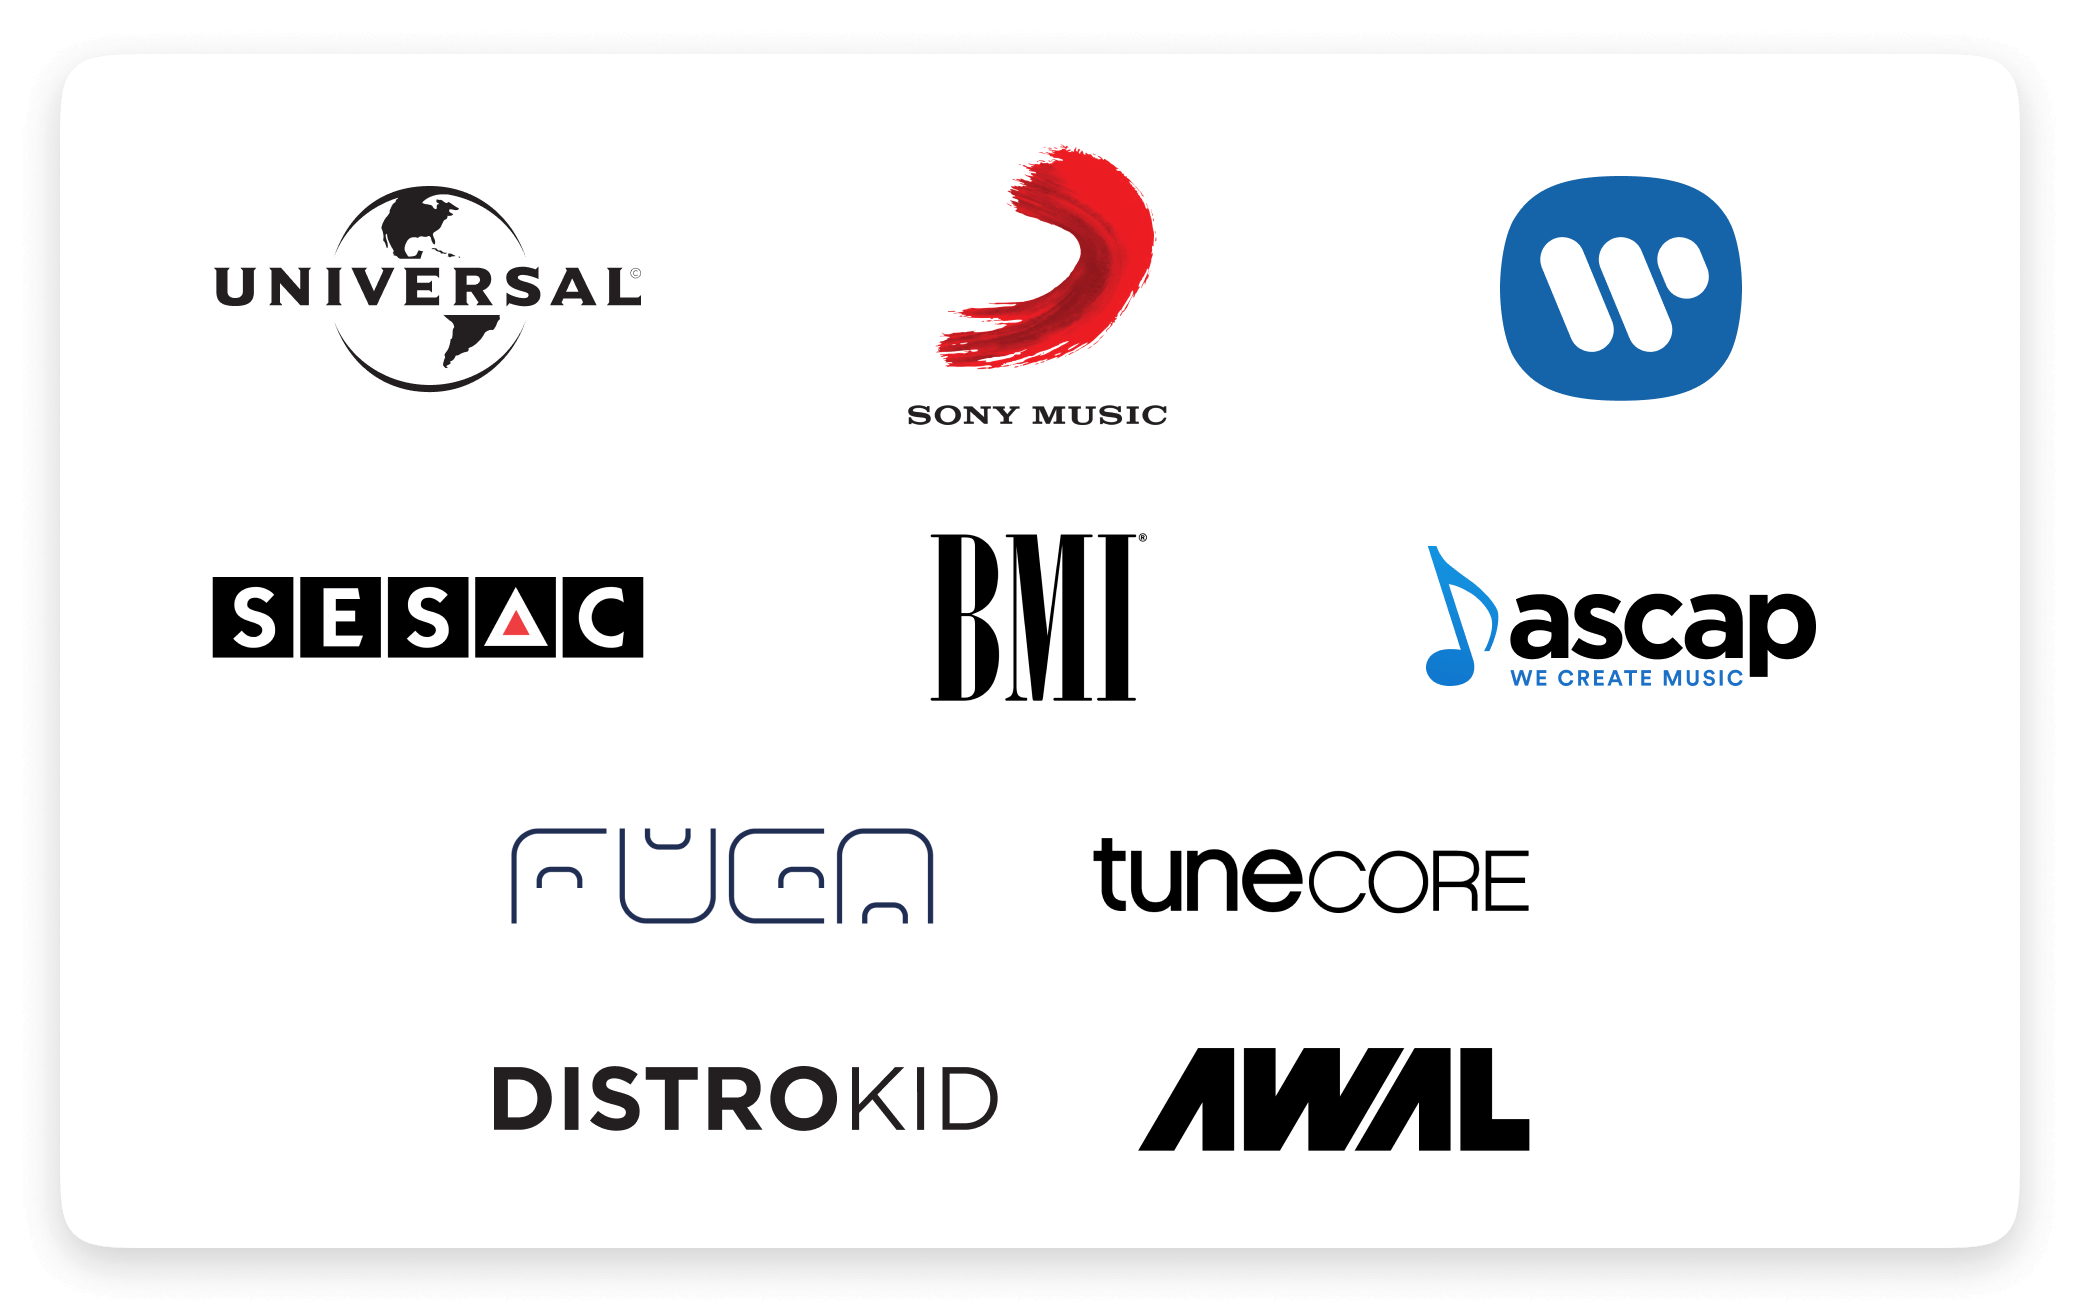 music label and distributor logos